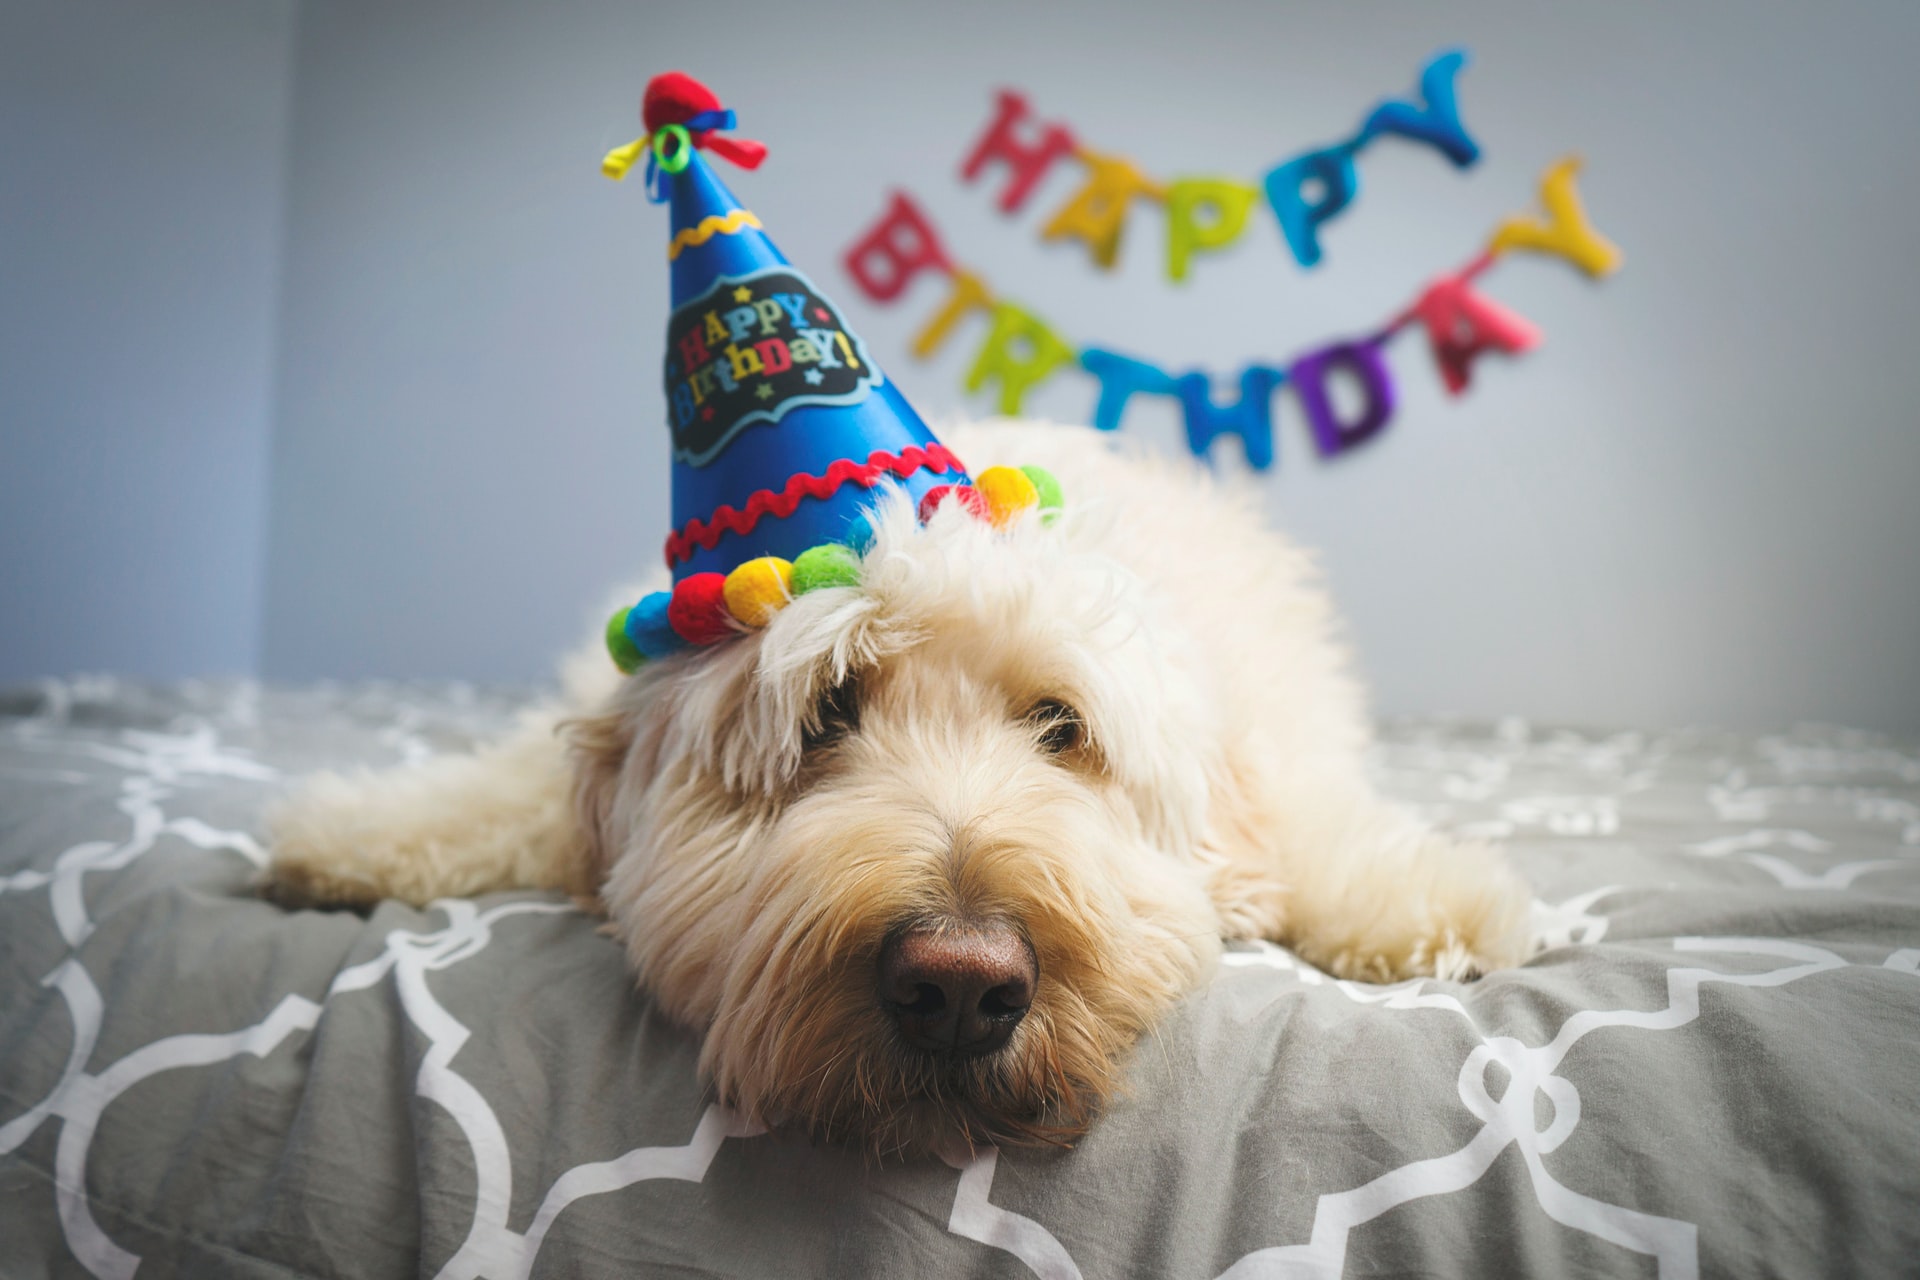 Birthday Wishes for Dog